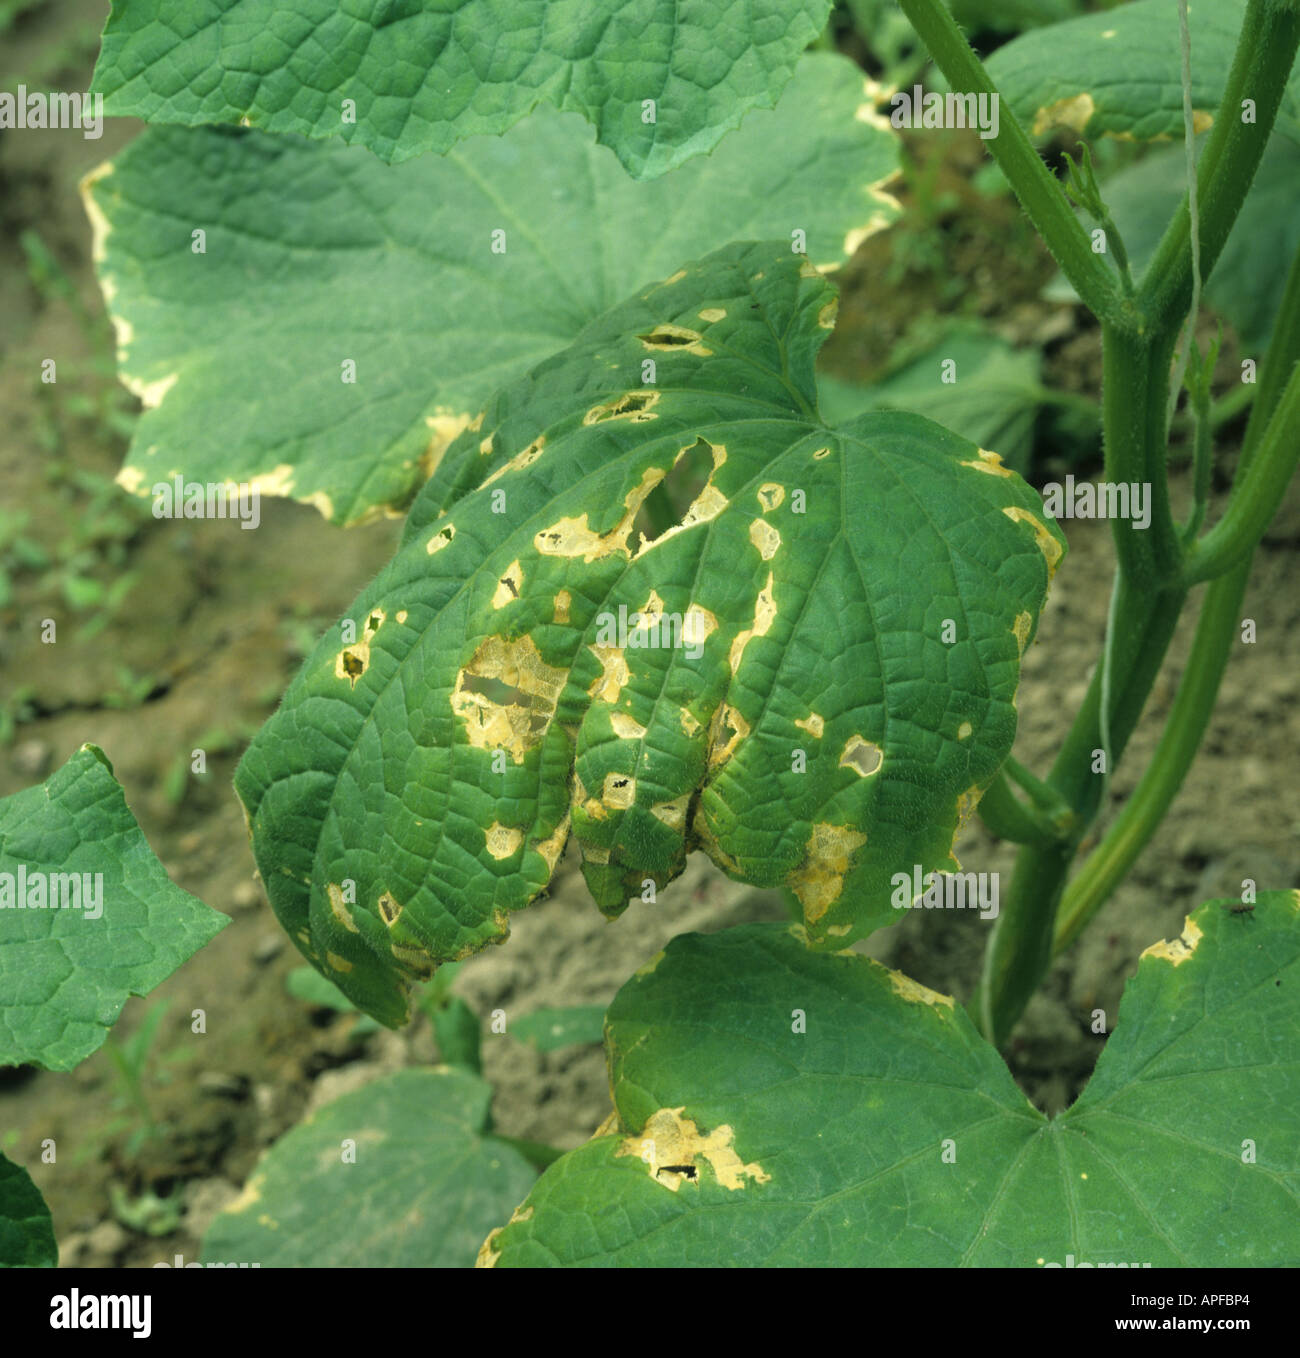 Downy mildew Pseudoperonospora cubensis lesions on a cucumber leaf Greece Stock Photo